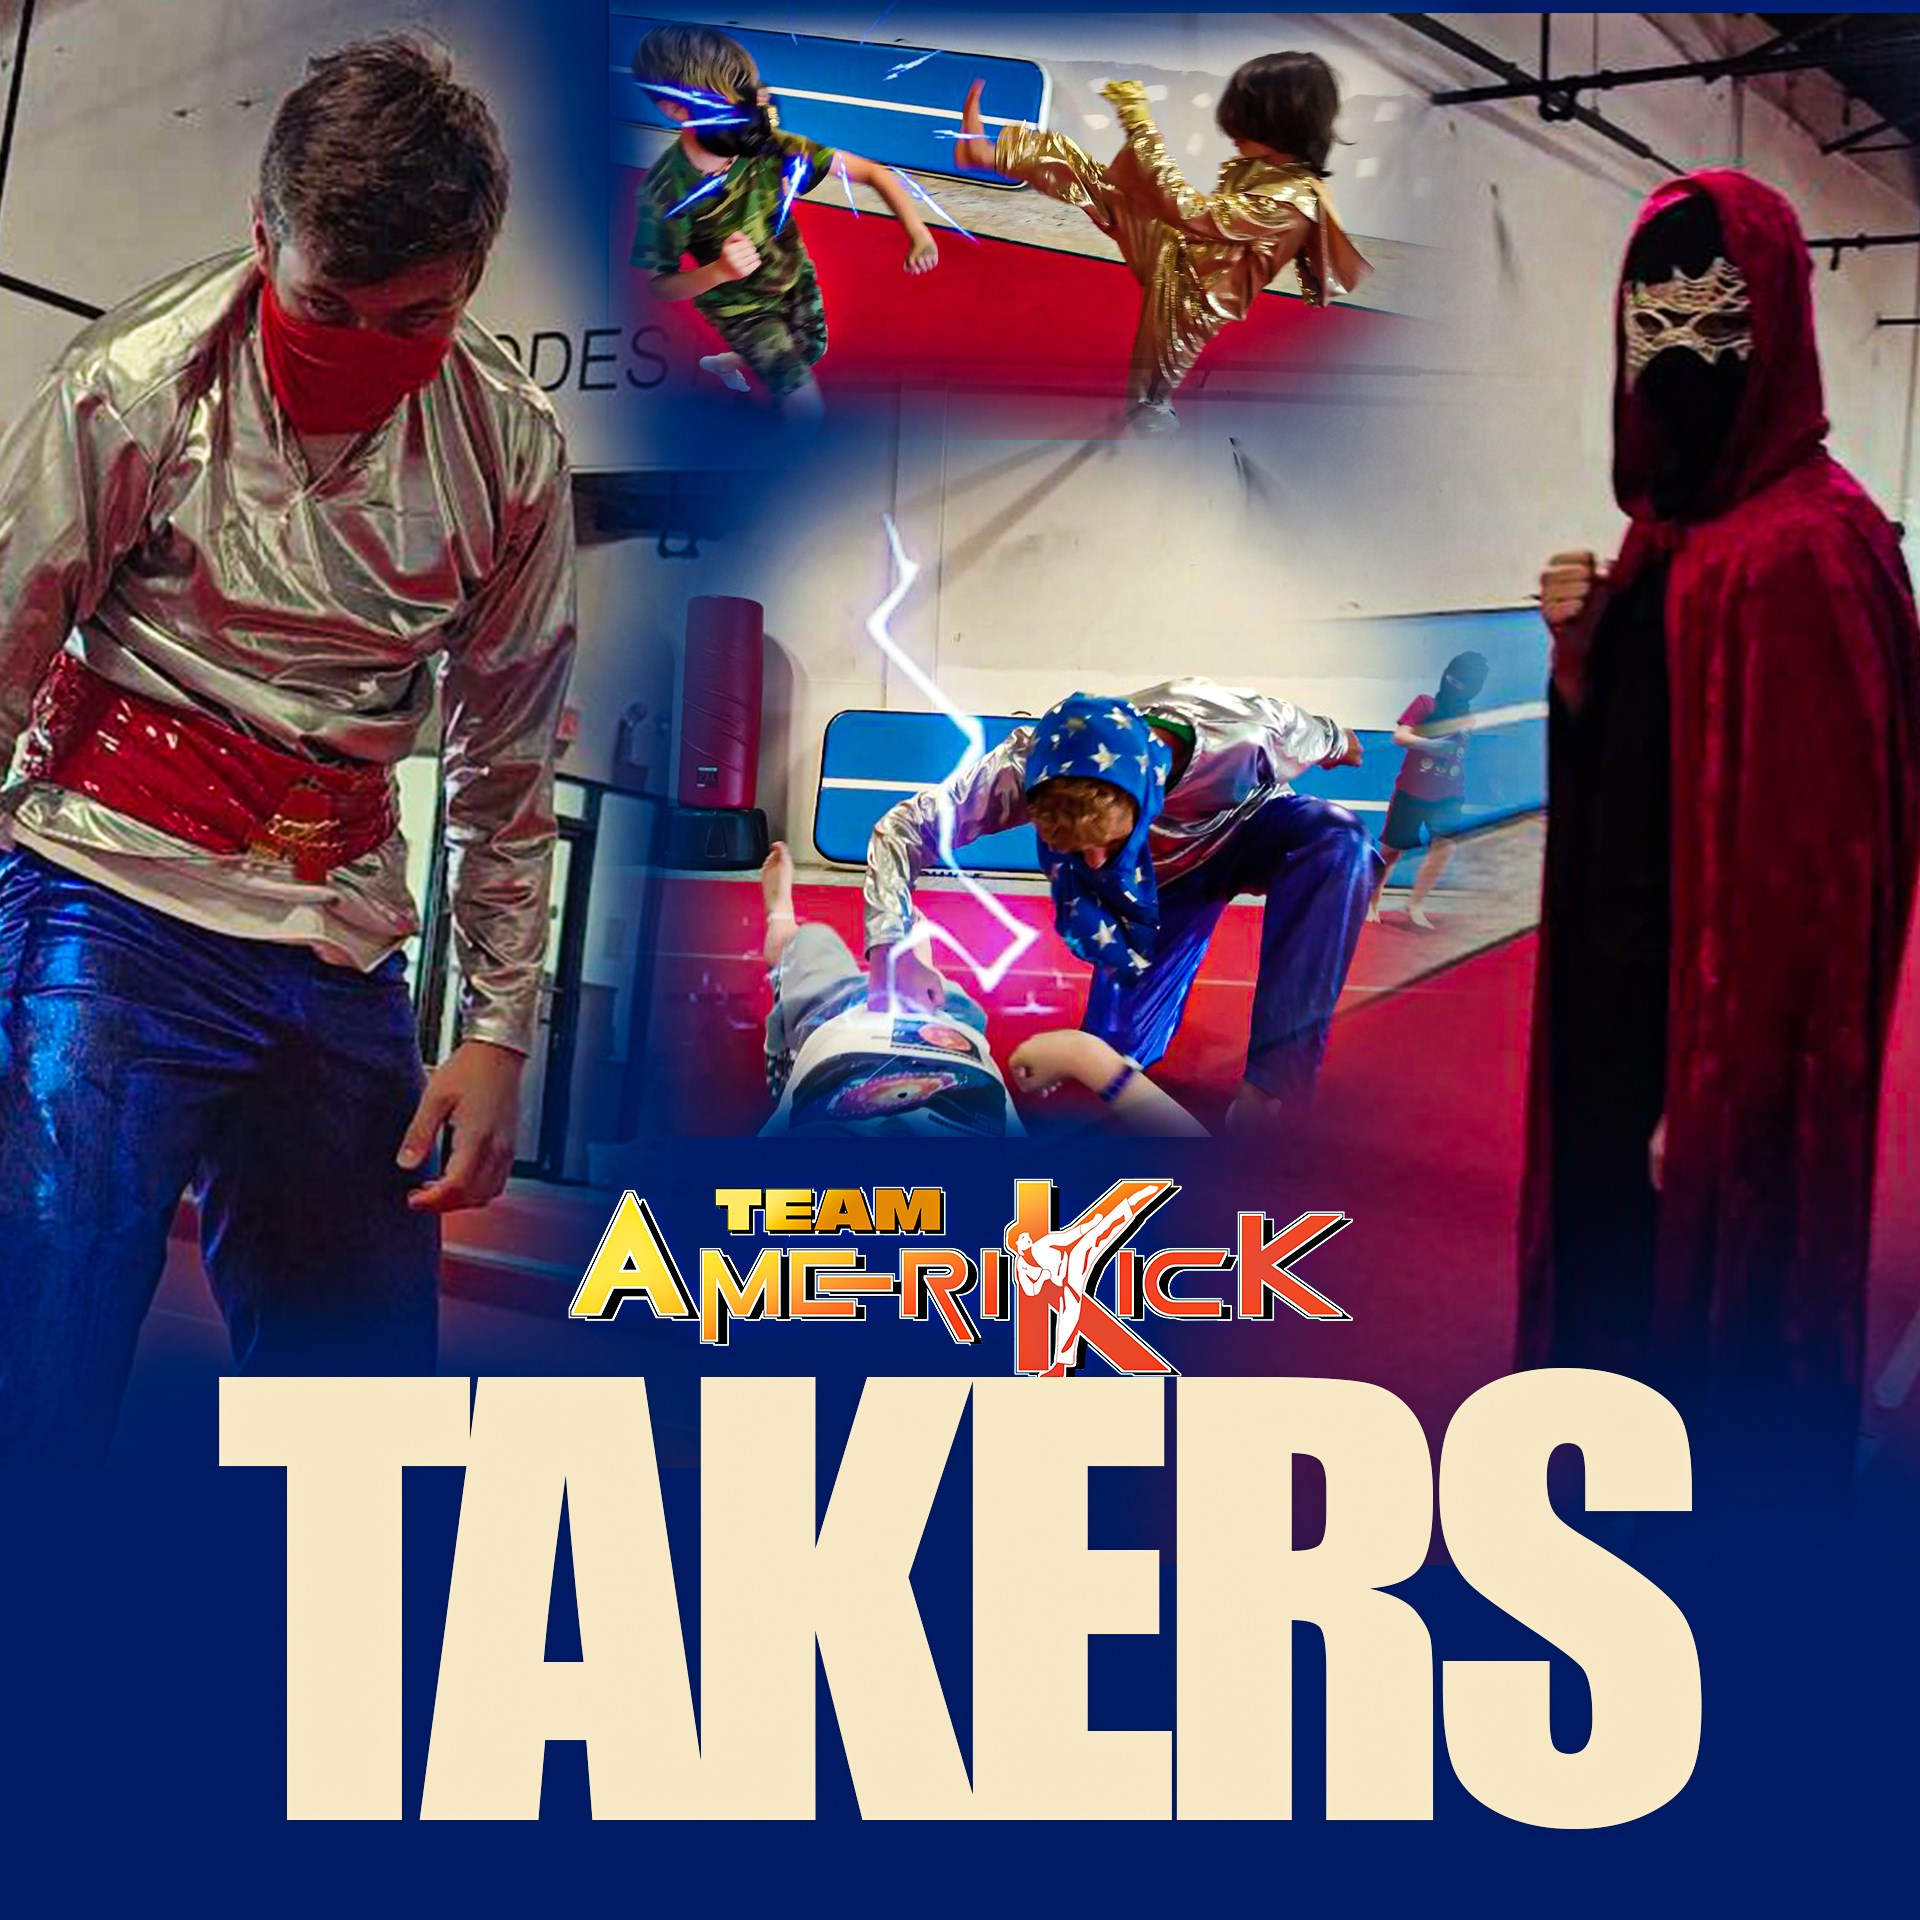 Team Amerikick: Takers